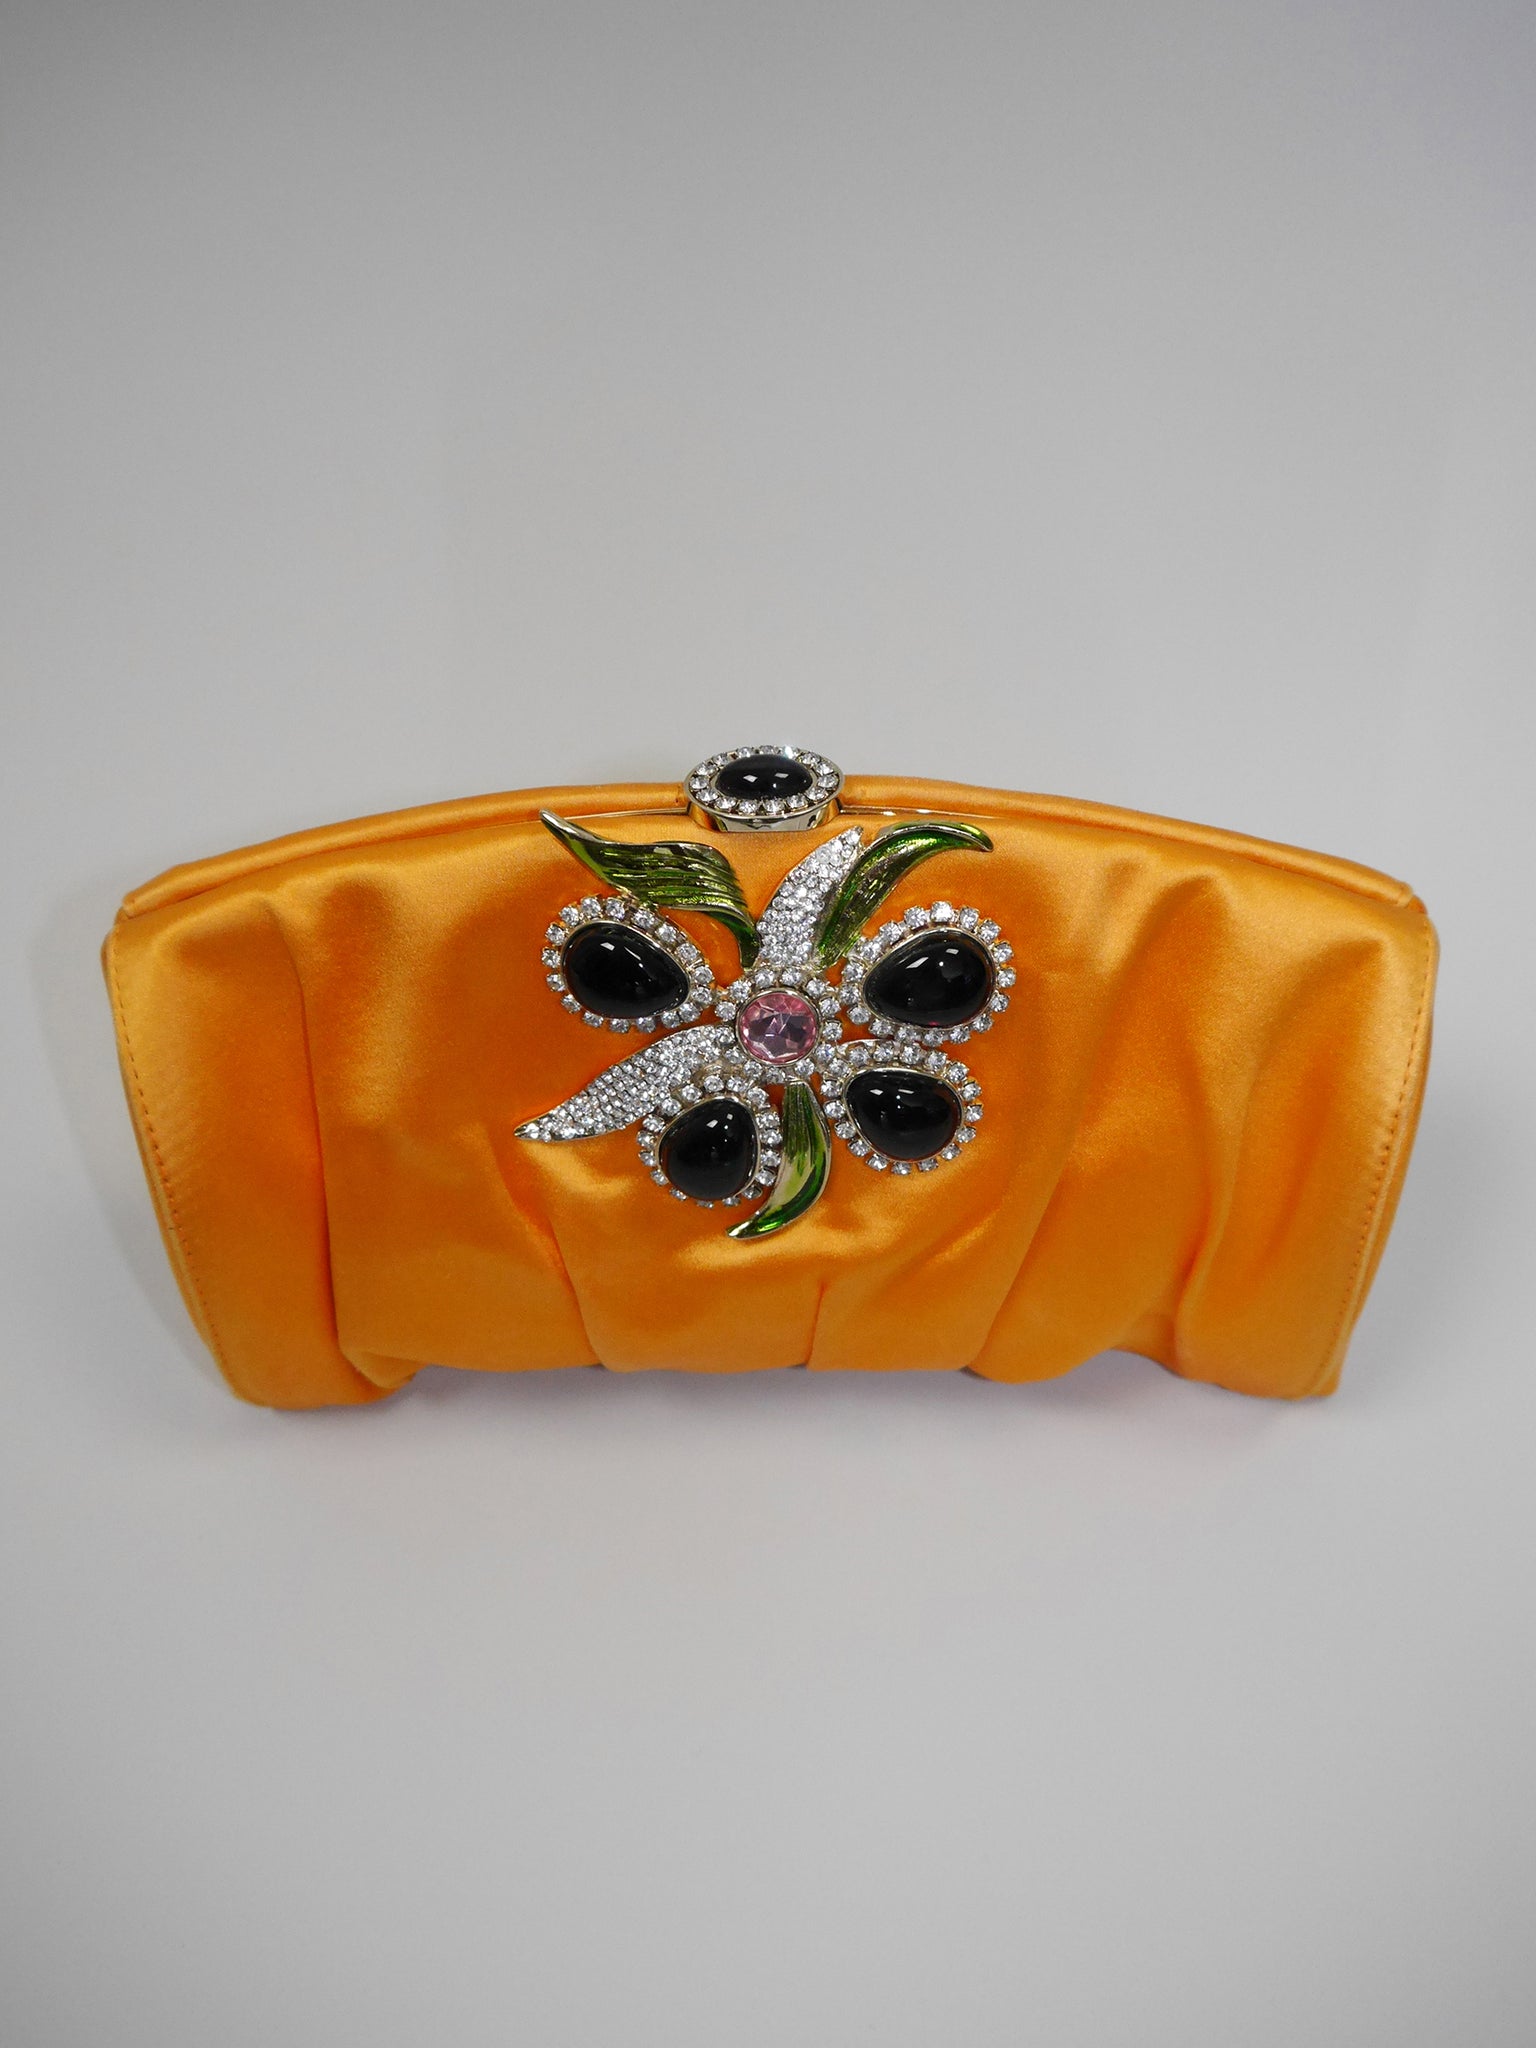 YVES SAINT LAURENT by Tom Ford Spring 2004 Vintage Floral Crystal Rhinestone Silk Evening Clutch Bag